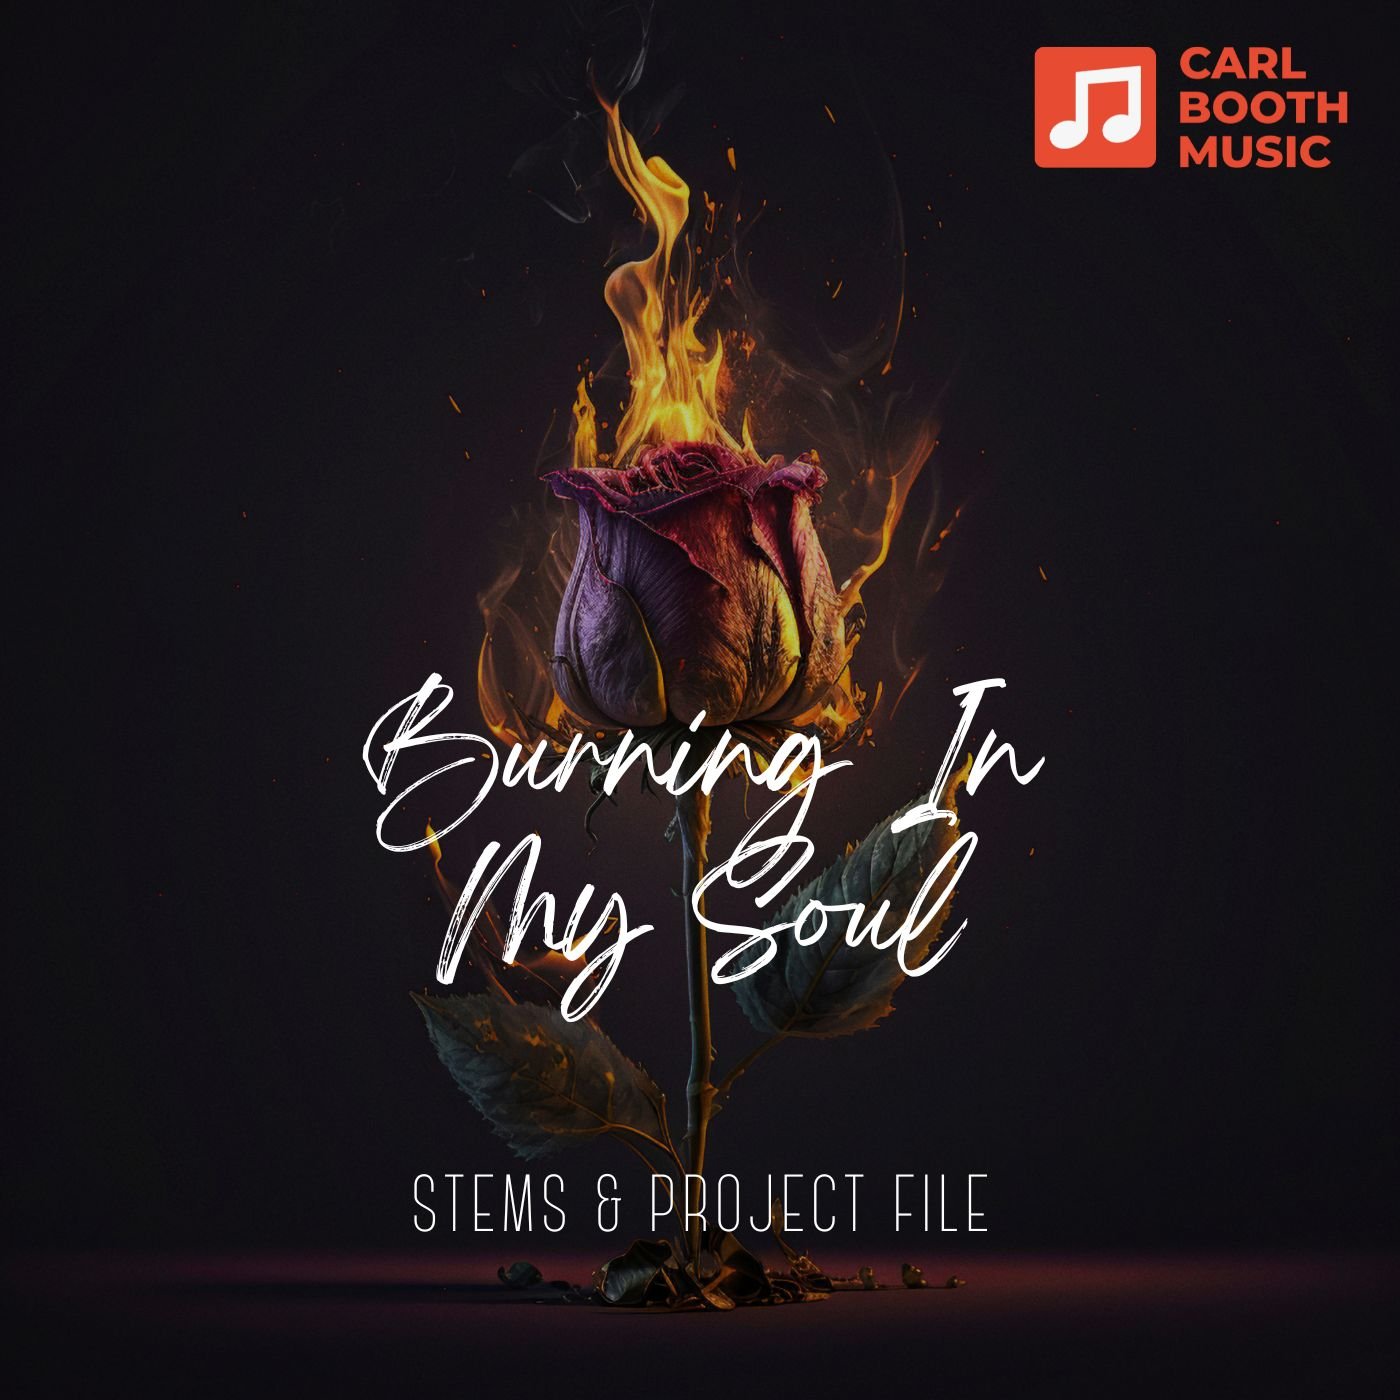 Burning In My Soul - Carl Booth Music - Scraps Audio